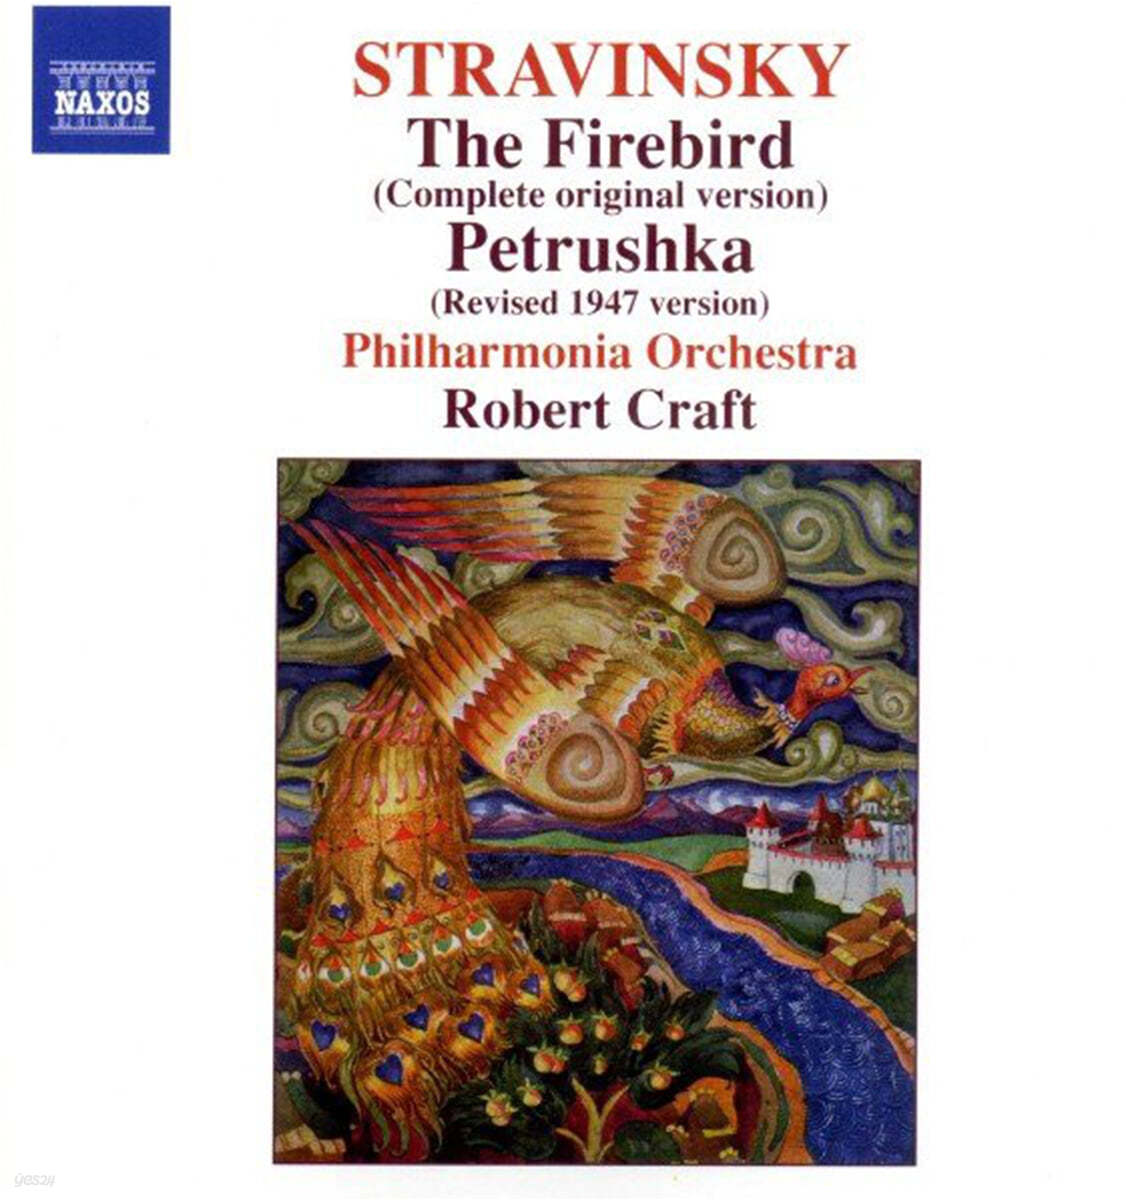 Robert Craft 스트라빈스키: 불새, 페트루슈카 (Stravinsky: The Firebird, Petrushka) 